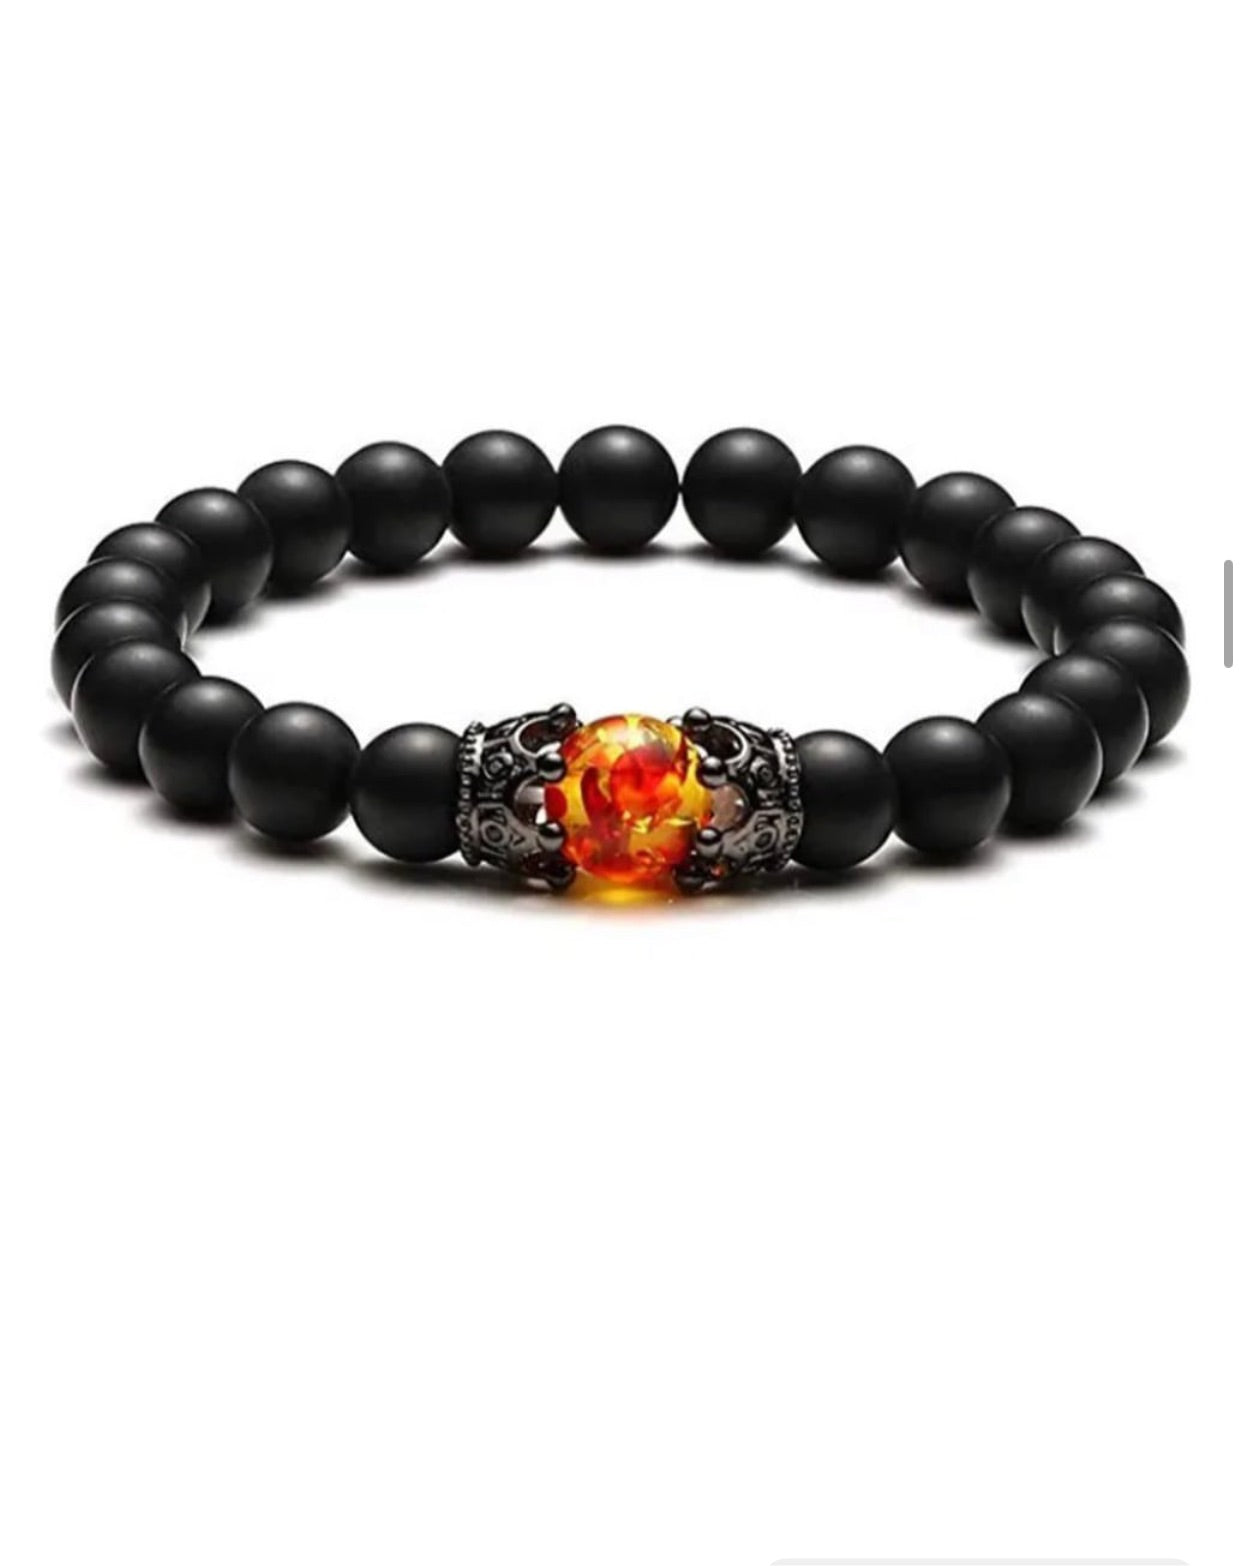 Tiger eye bead bracelet